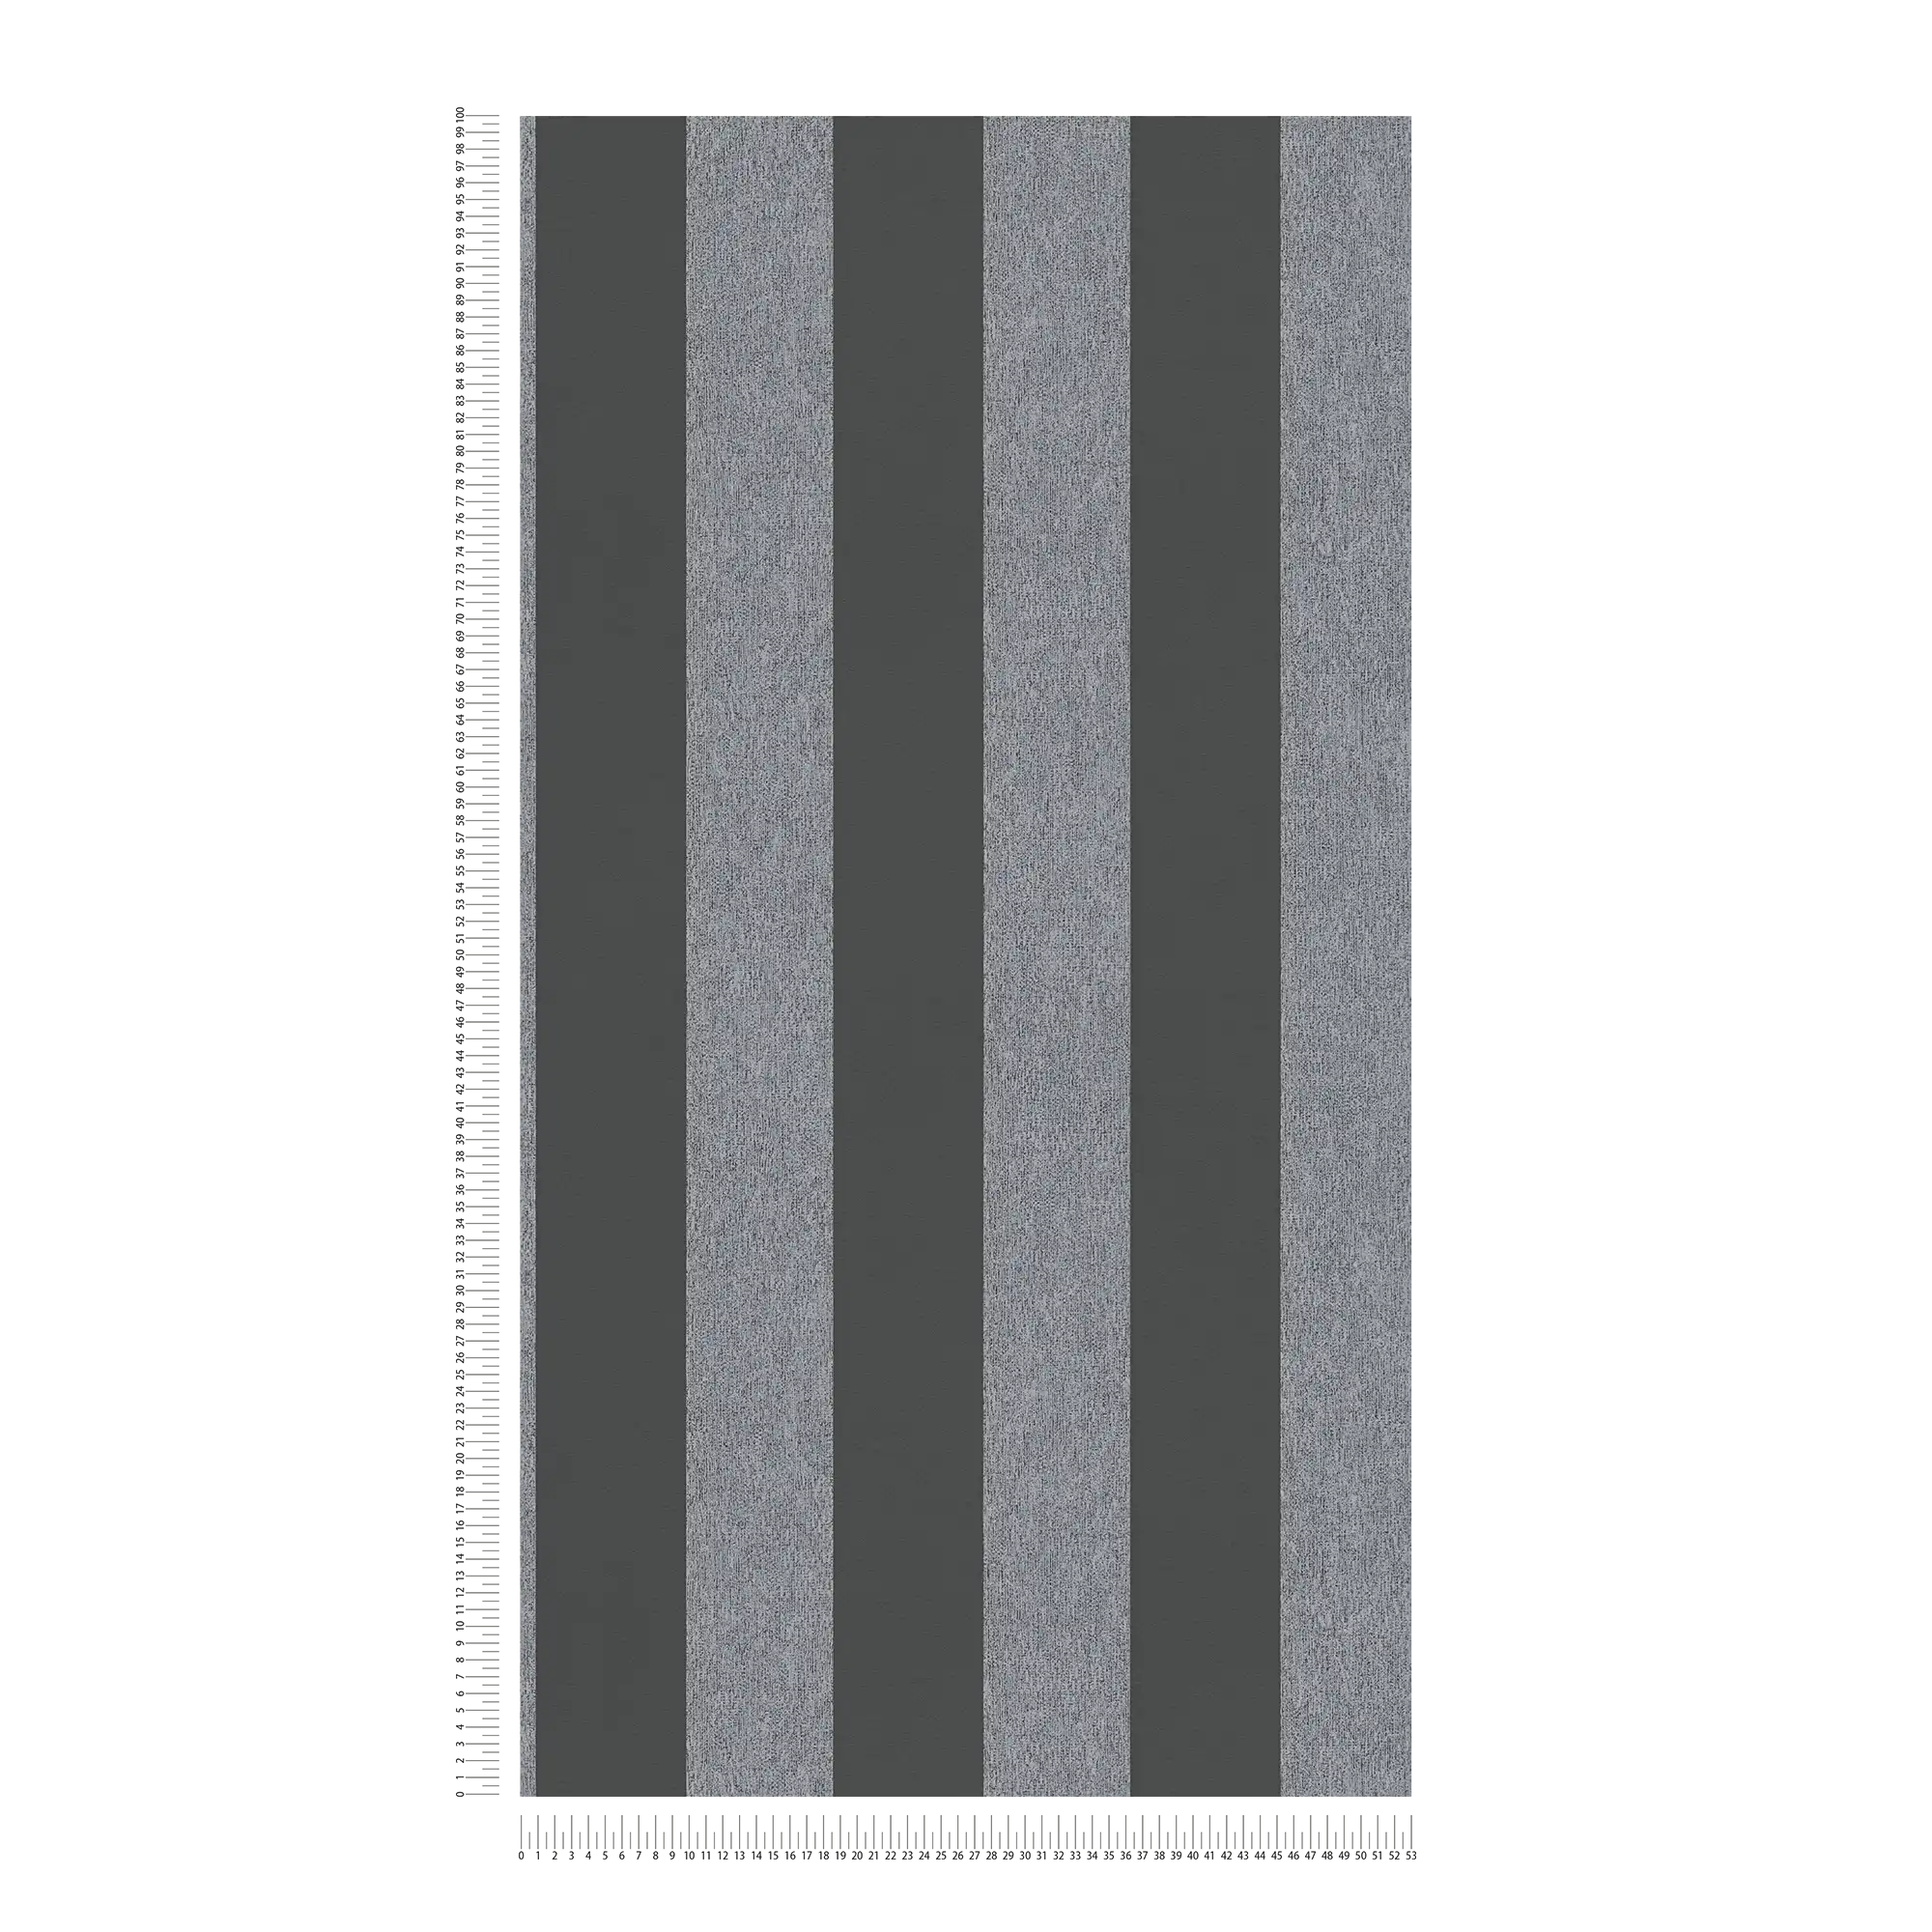             Stripes non-woven wallpaper in matt textured look - black, grey
        